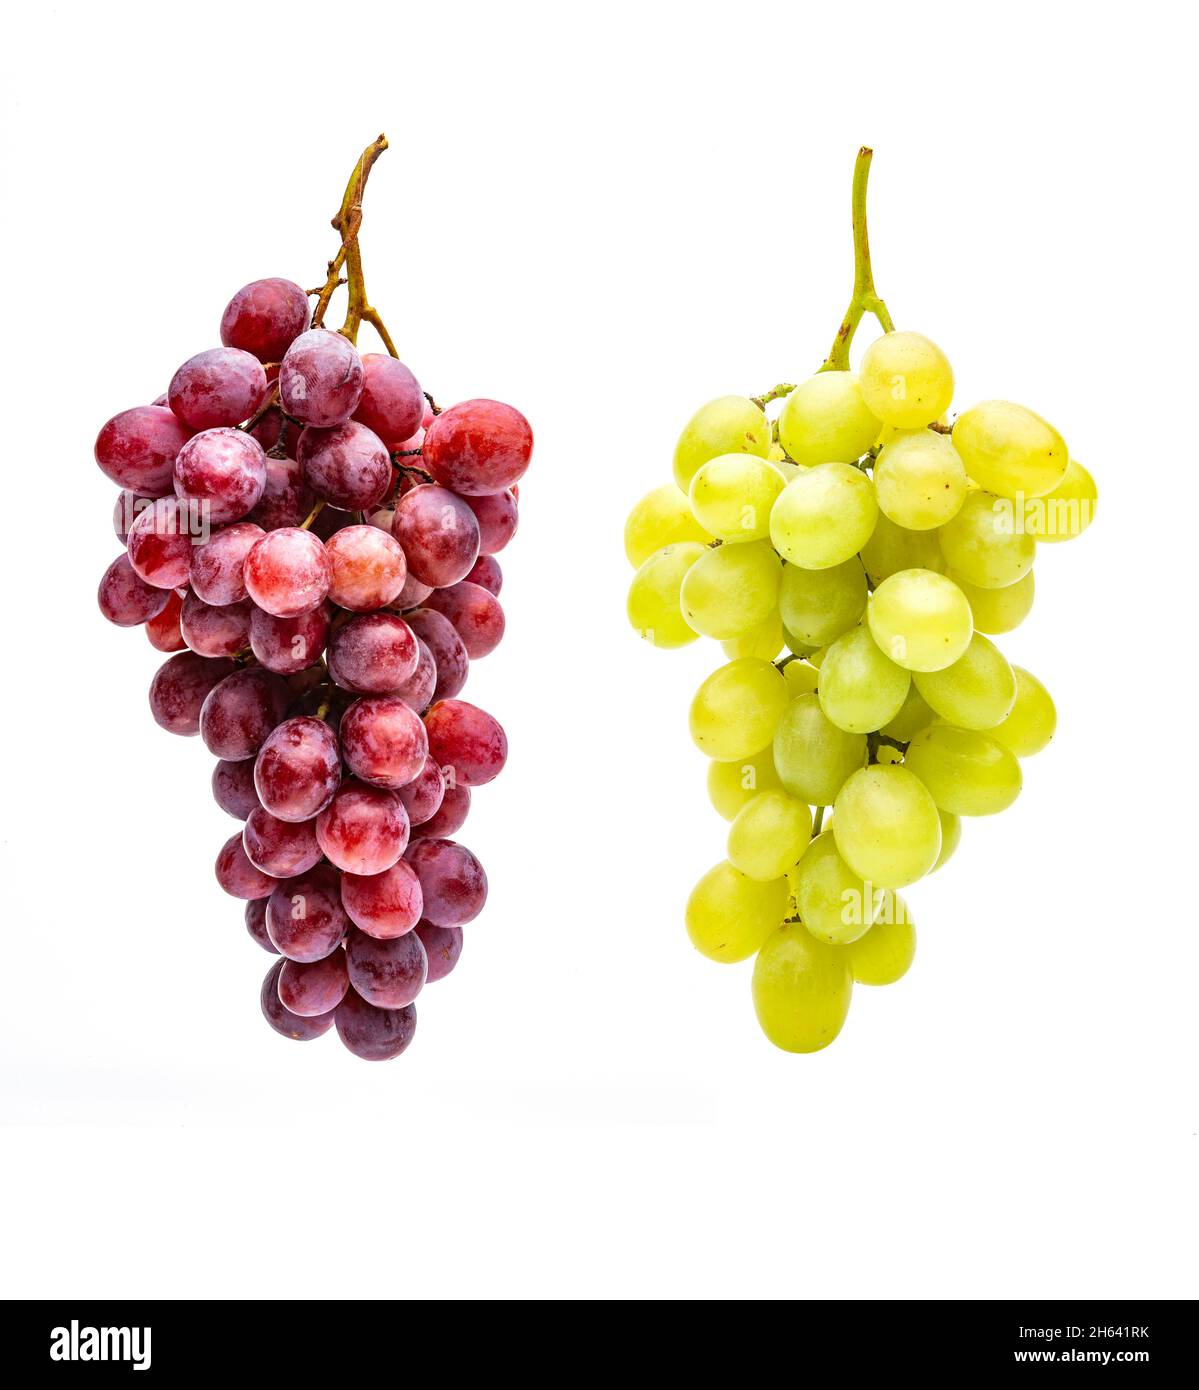 uva da vino rosso e uva da vino bianco su sfondo bianco Foto Stock